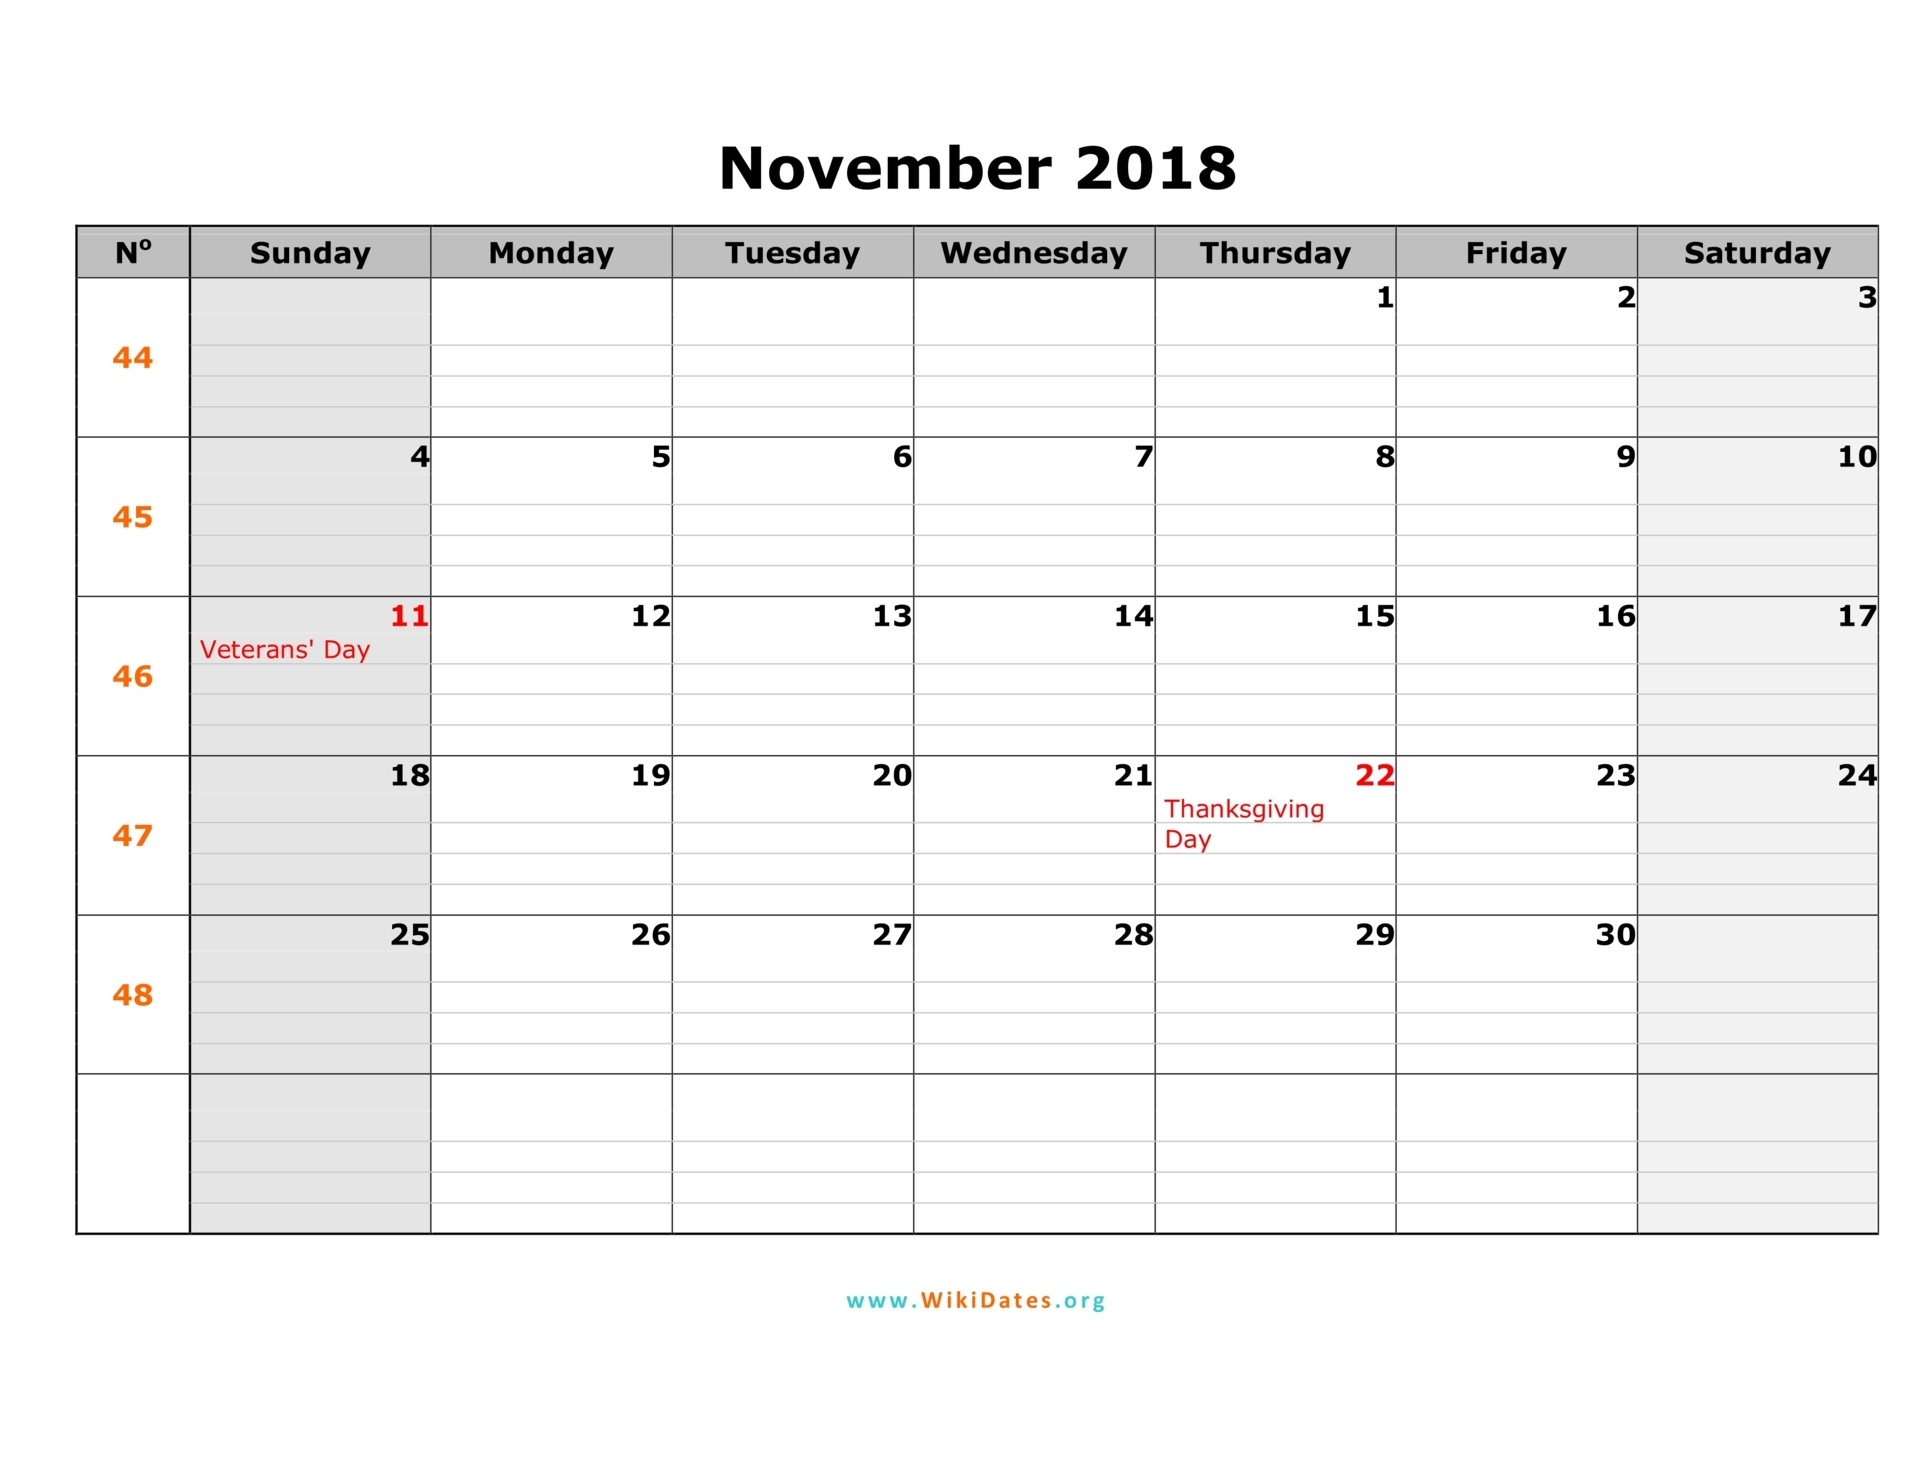 November 2018 Calendar | WikiDates.org